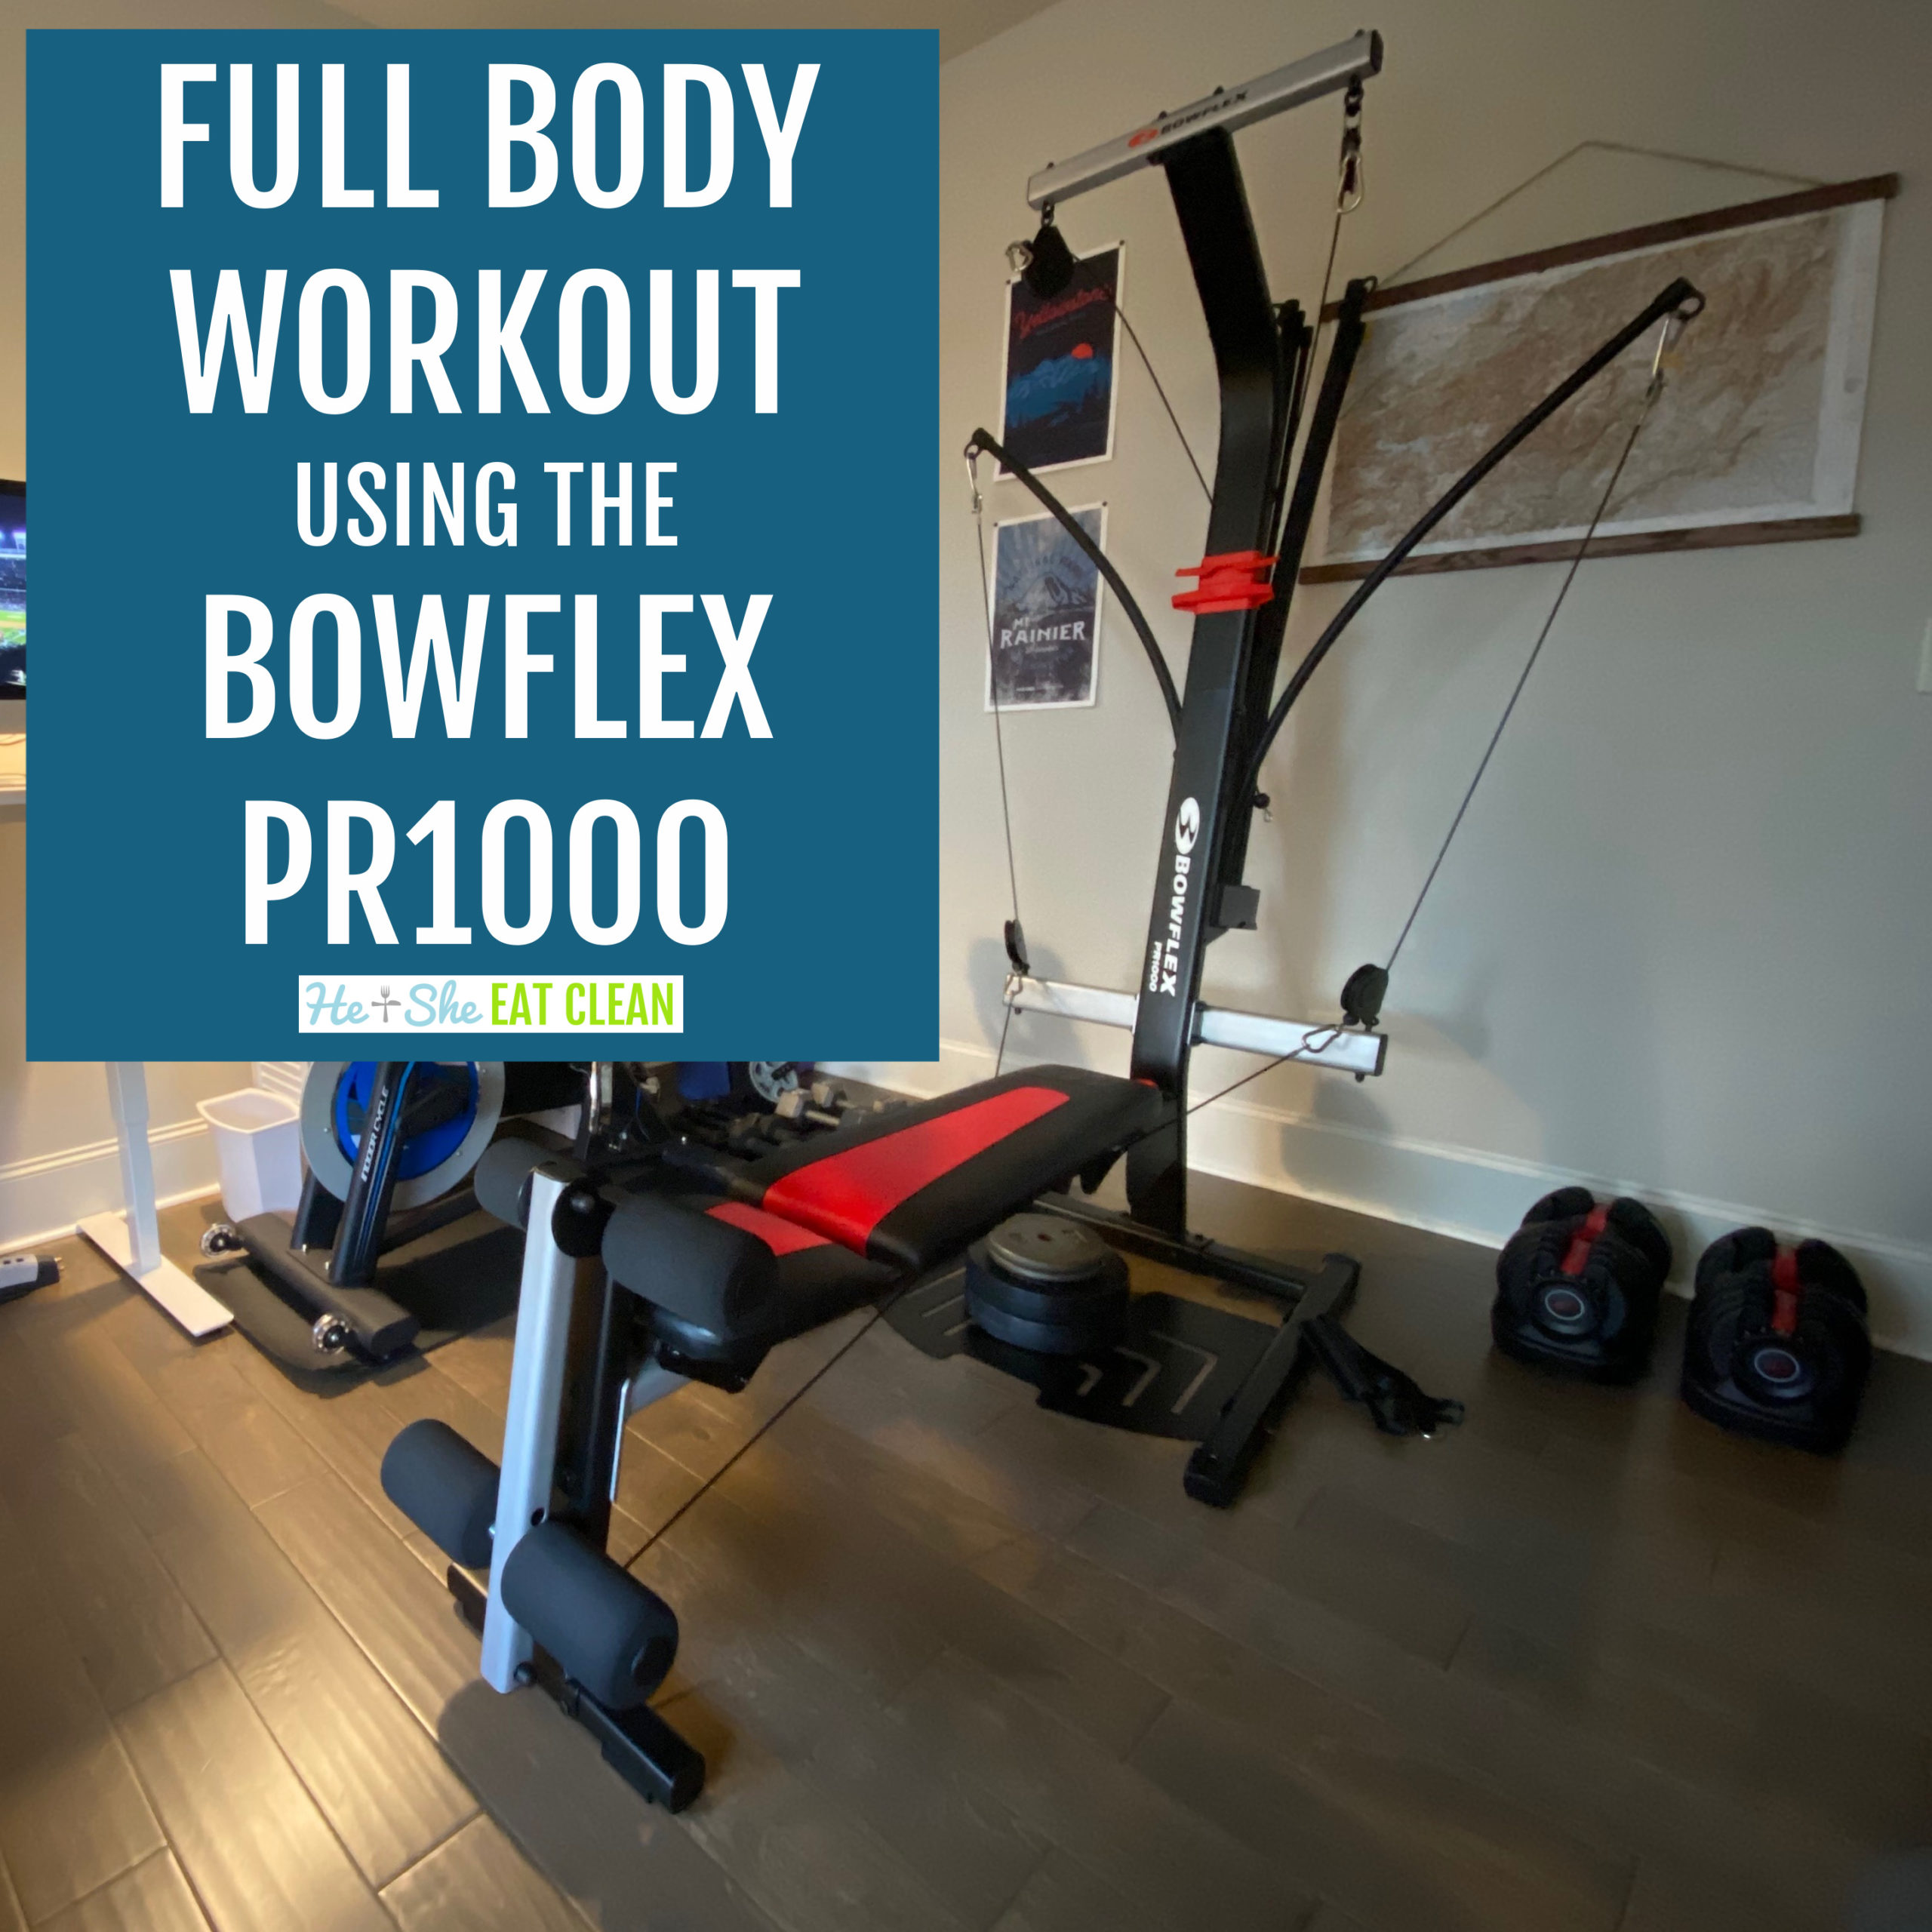 15 Minute Bowflex Pr1000 Workout Video for Fat Body